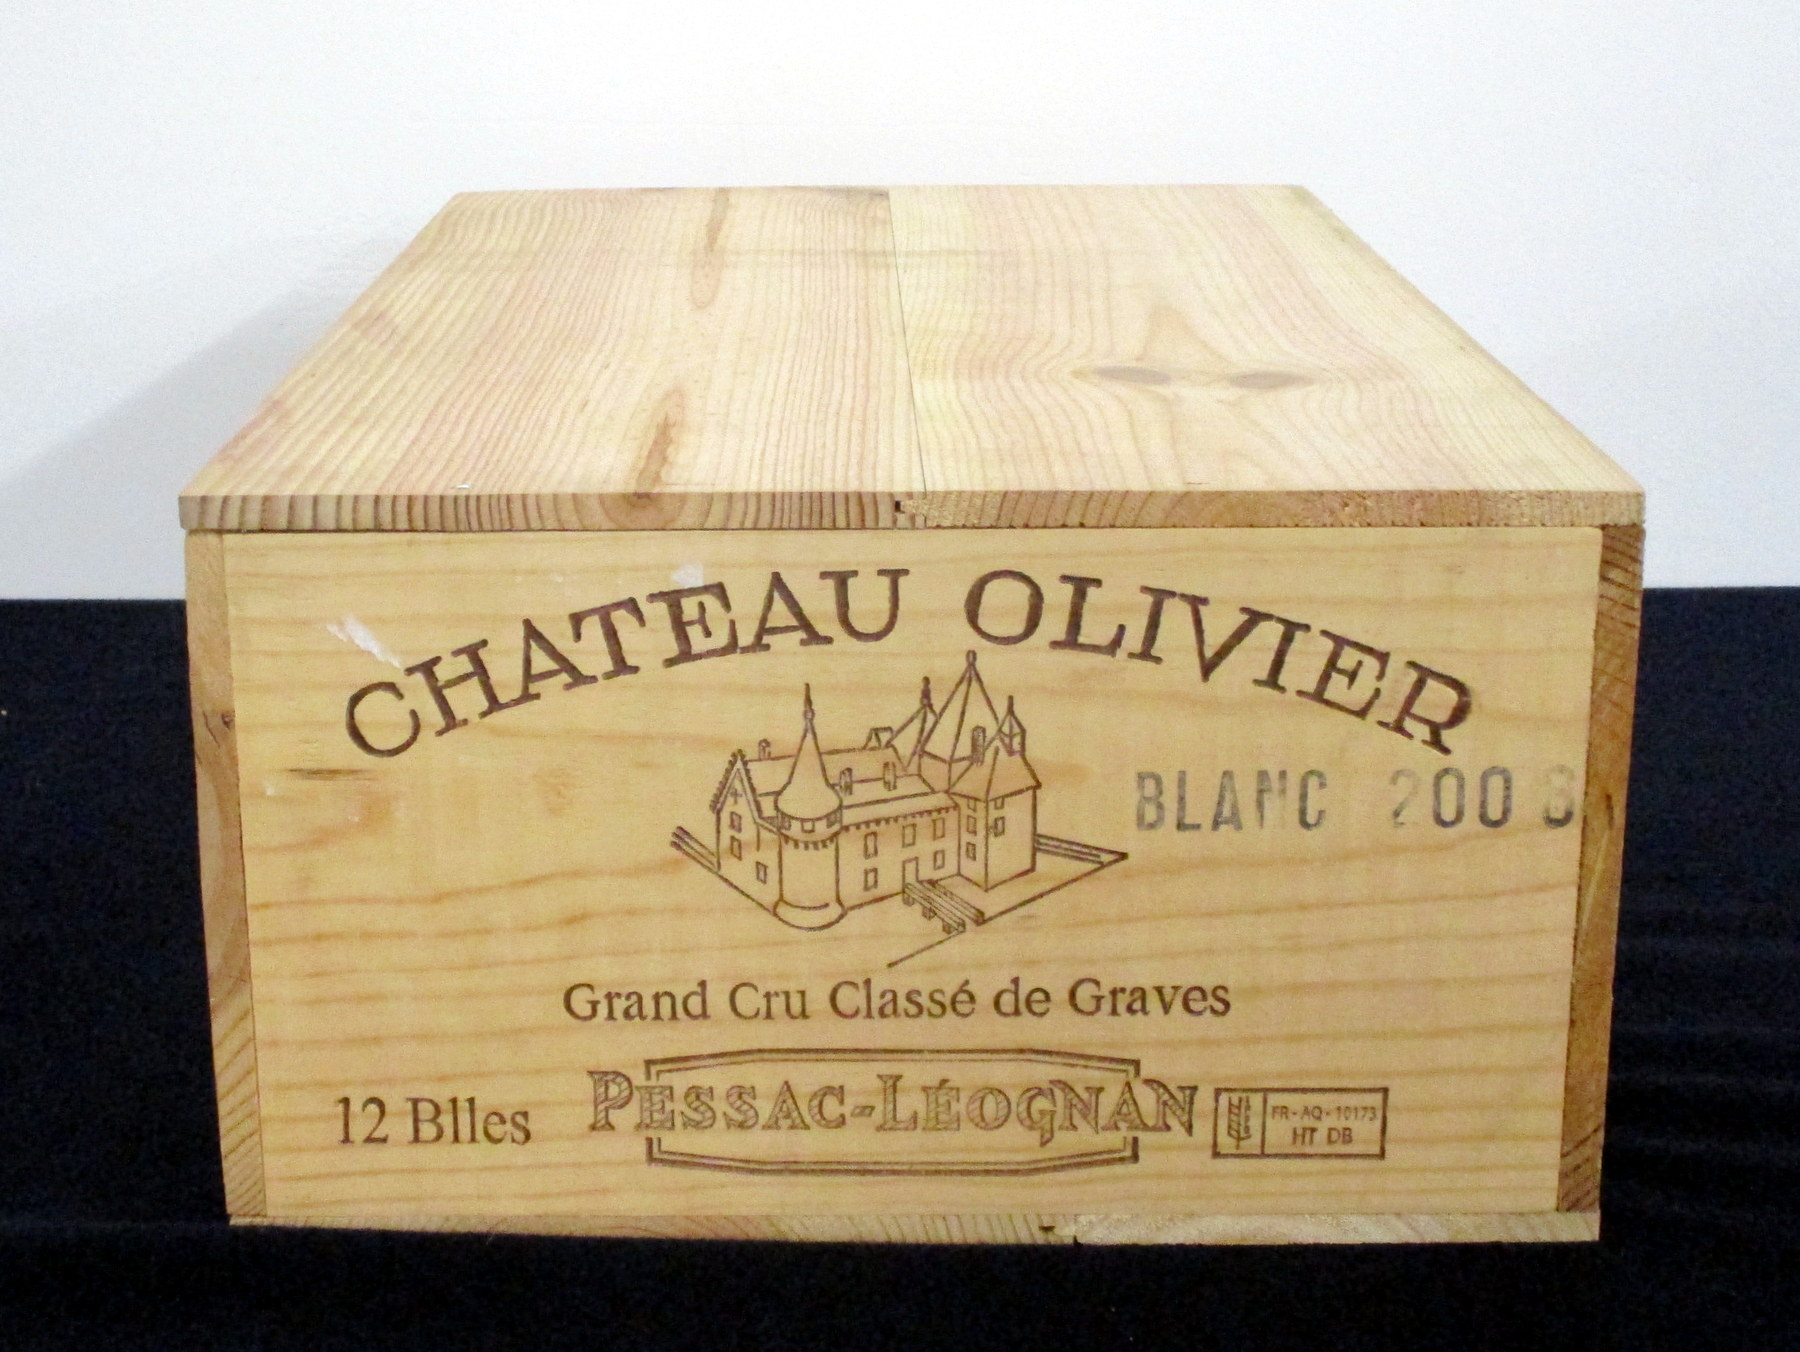 12 bts Ch. Olivier 2006 owc Pessac-Léognan Grand Cru Classé de Graves